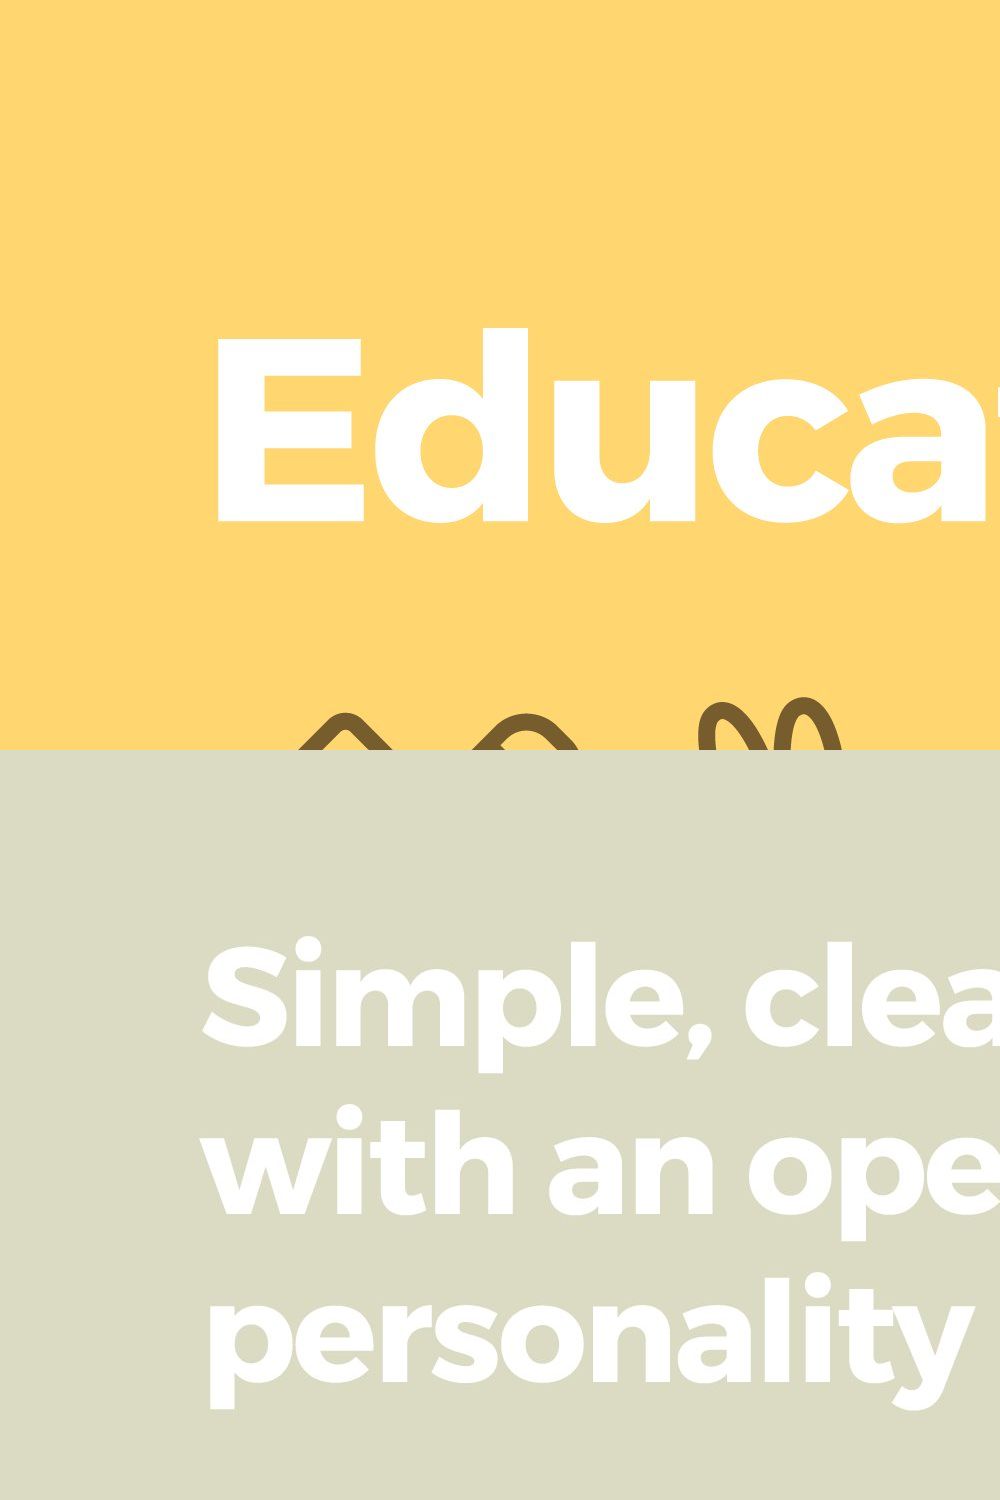 Education Icons — Pixi Line pinterest preview image.